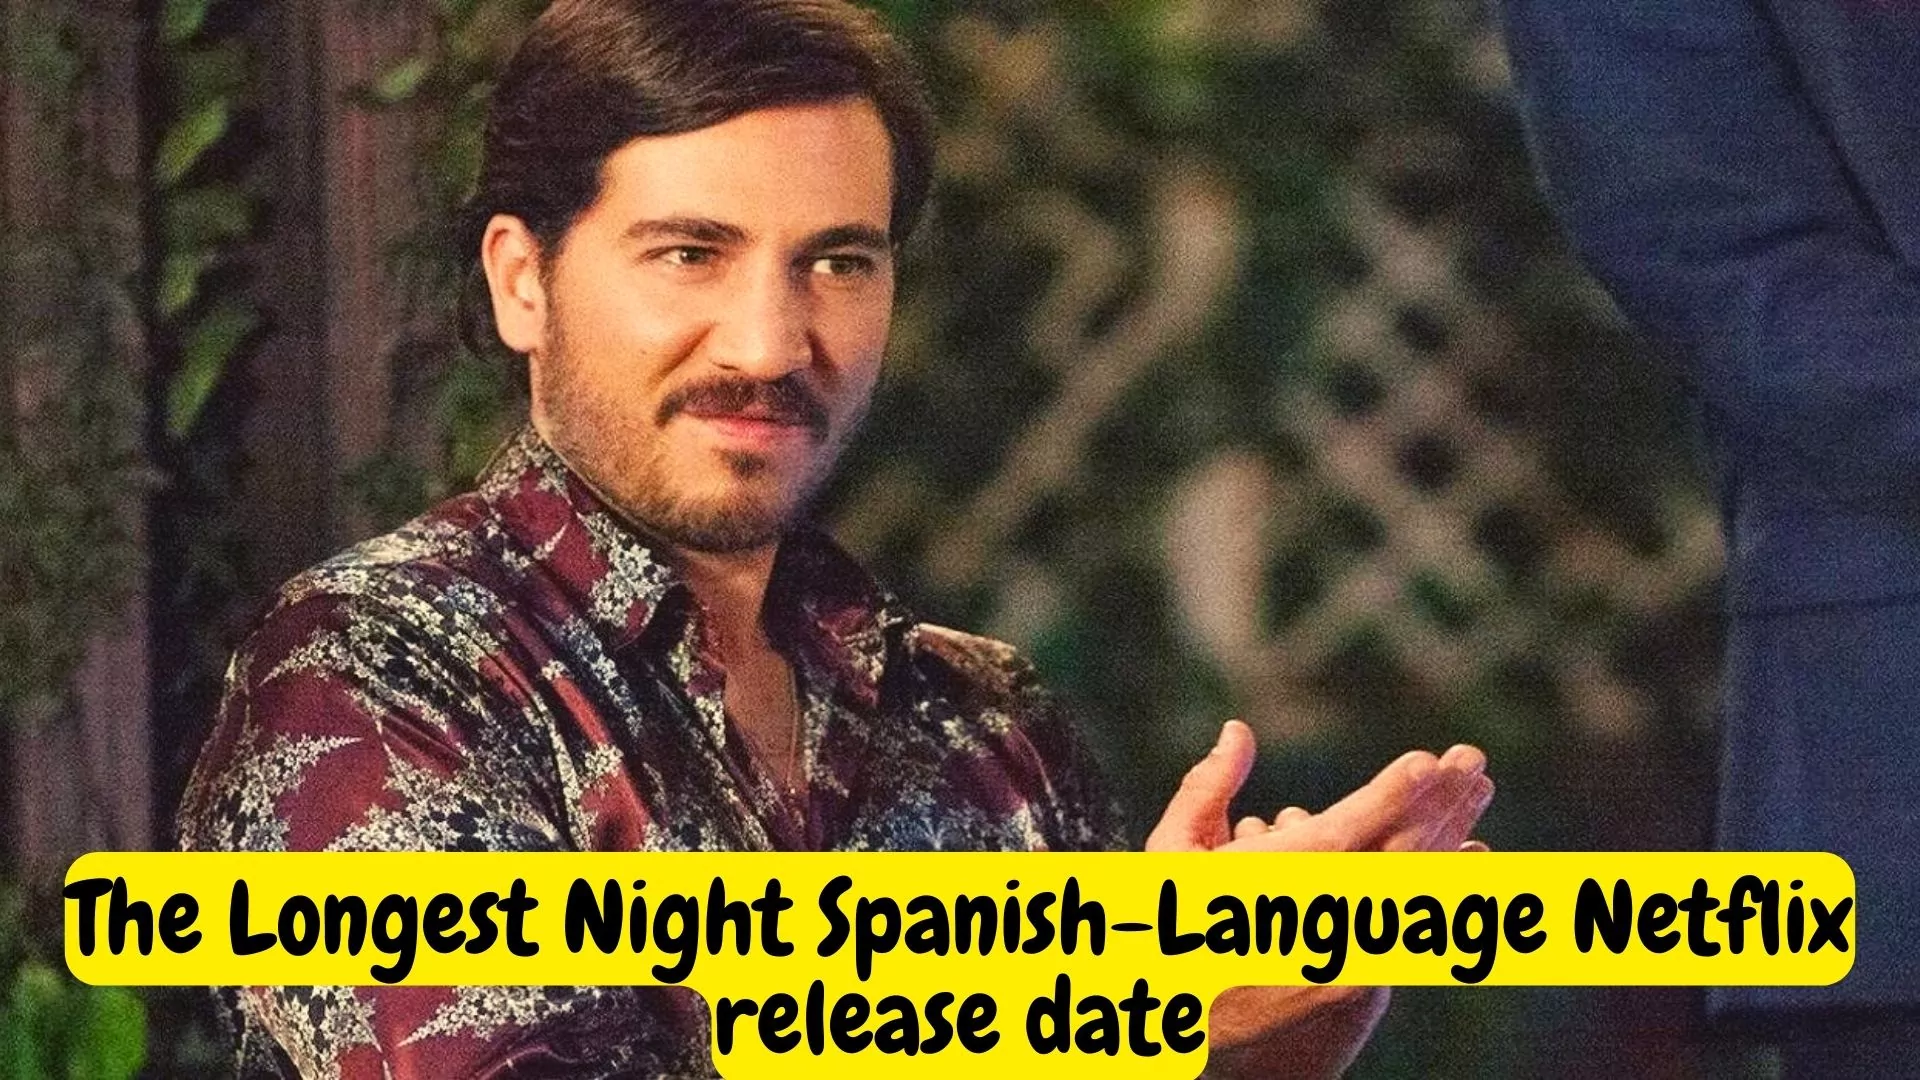 The Longest Night Spanish-Language Netflix release date